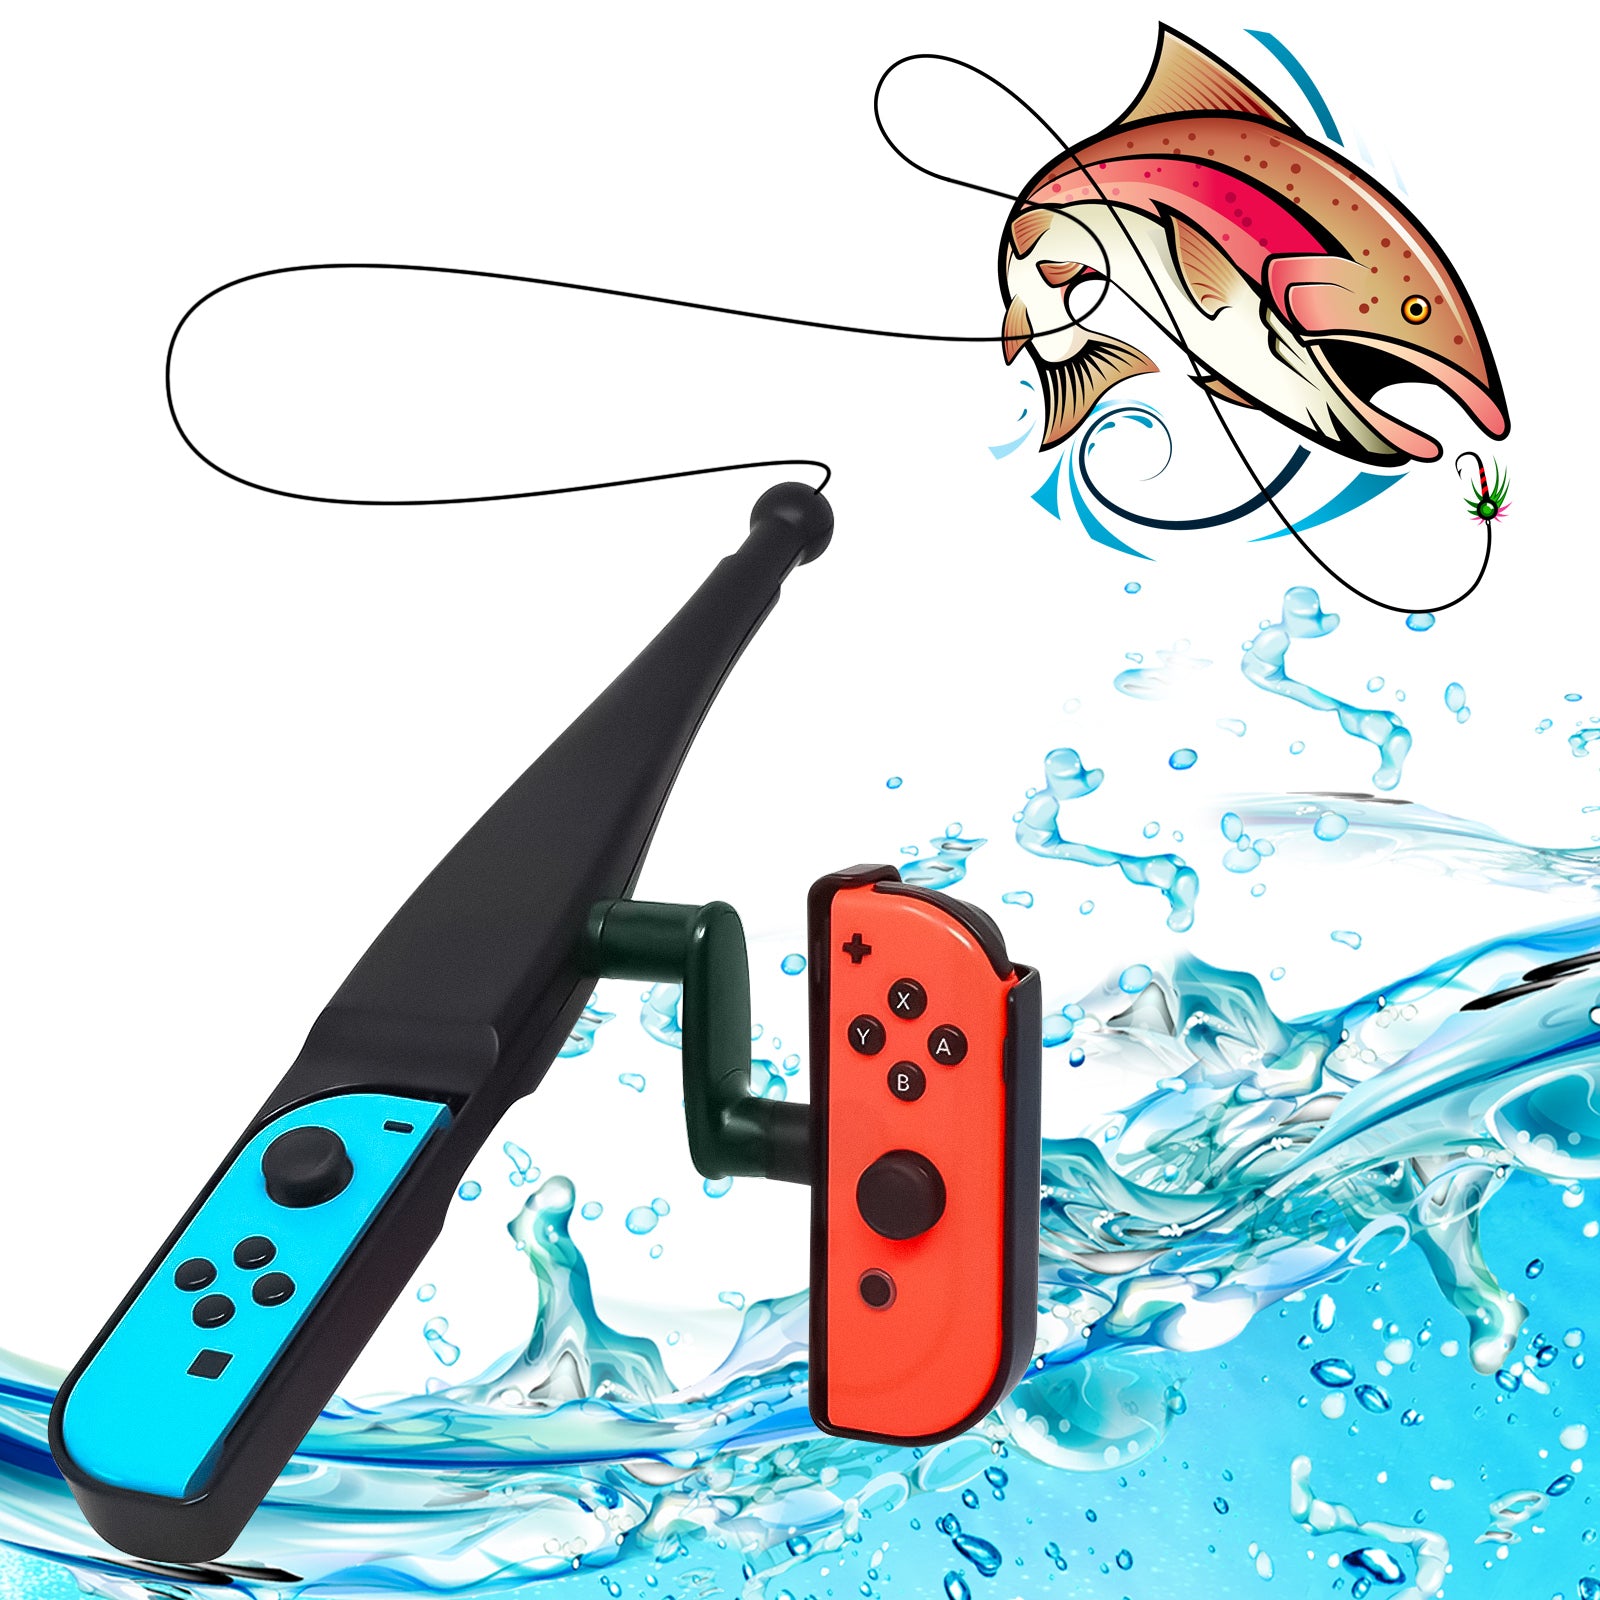 Nintendo Fishing Spirits Only Joy-CON Attachment for Nintendo